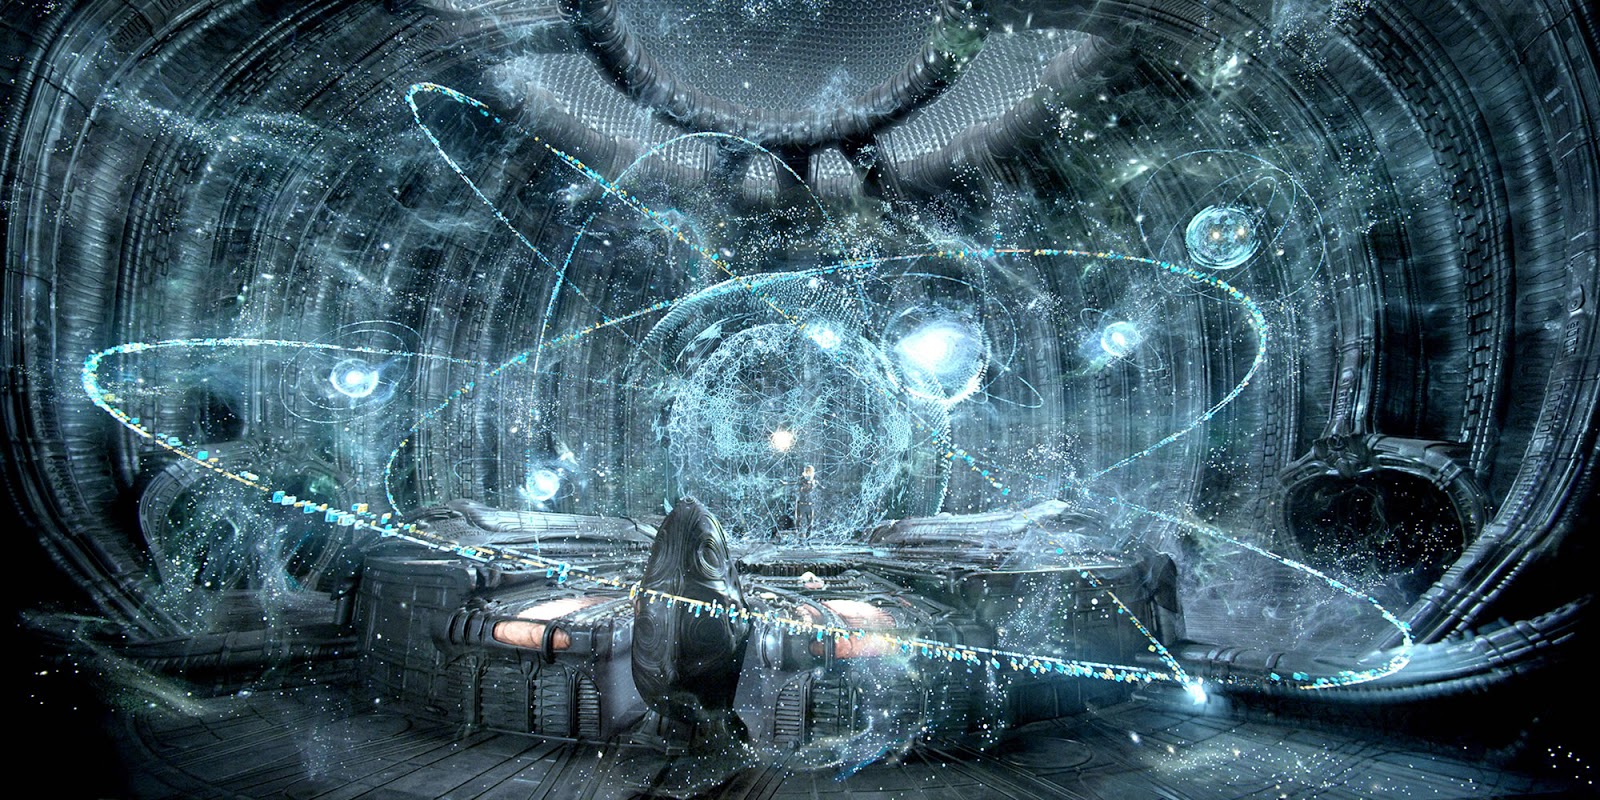 http://2.bp.blogspot.com/-kCnqHiEWKzQ/UKZMorYWAKI/AAAAAAAADlE/rstZ7vxRnEA/s1600/prometheus-hologram-movie-ridley-scott-alien-science-fiction-2012.jpg